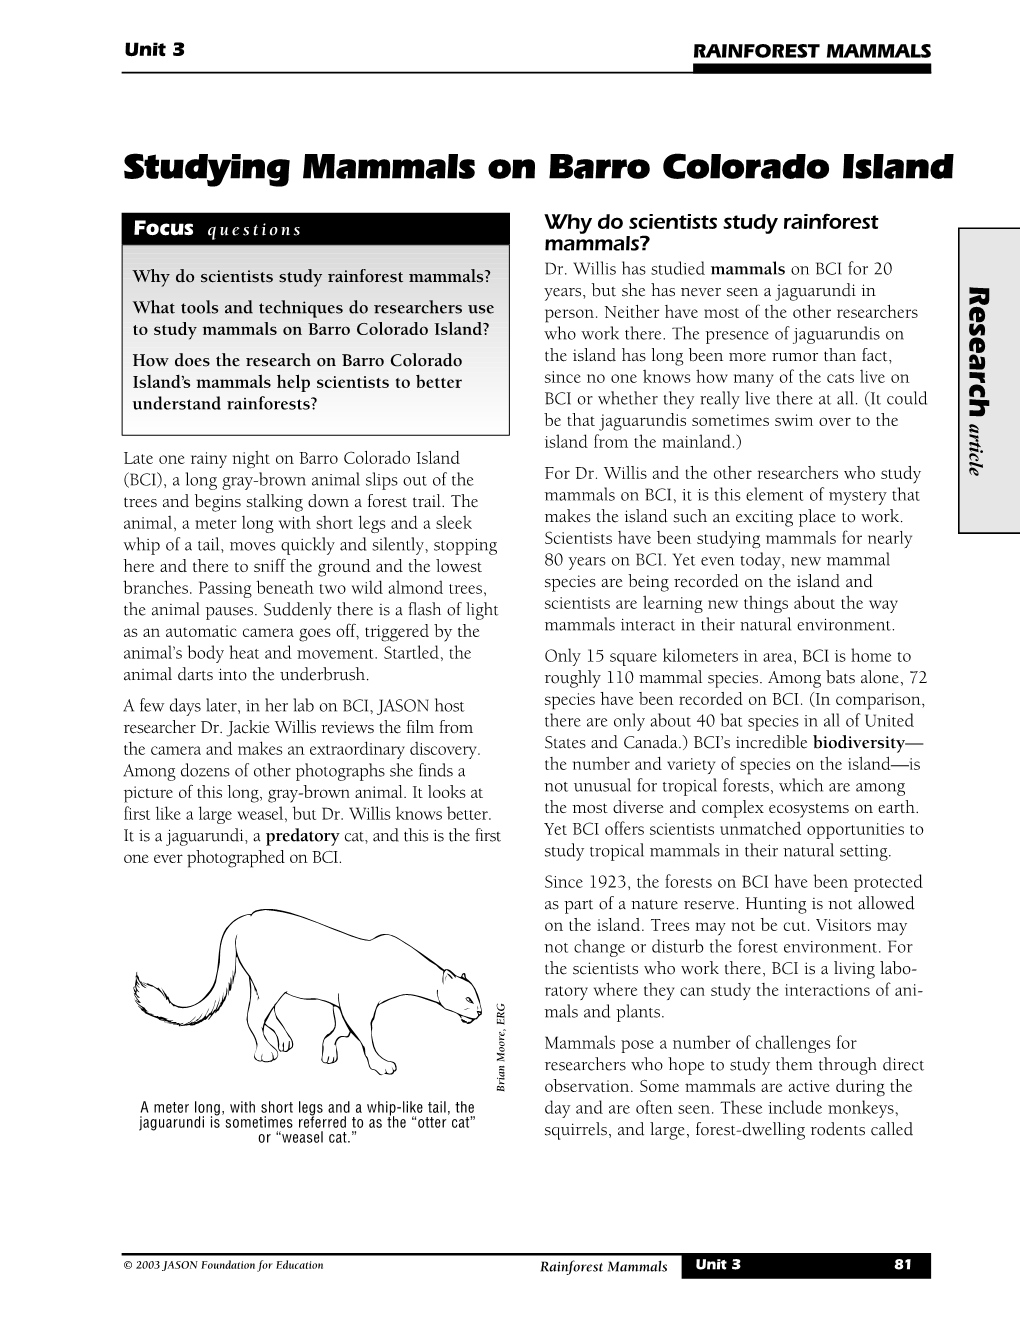 Studying Mammals on Barro Colorado Island